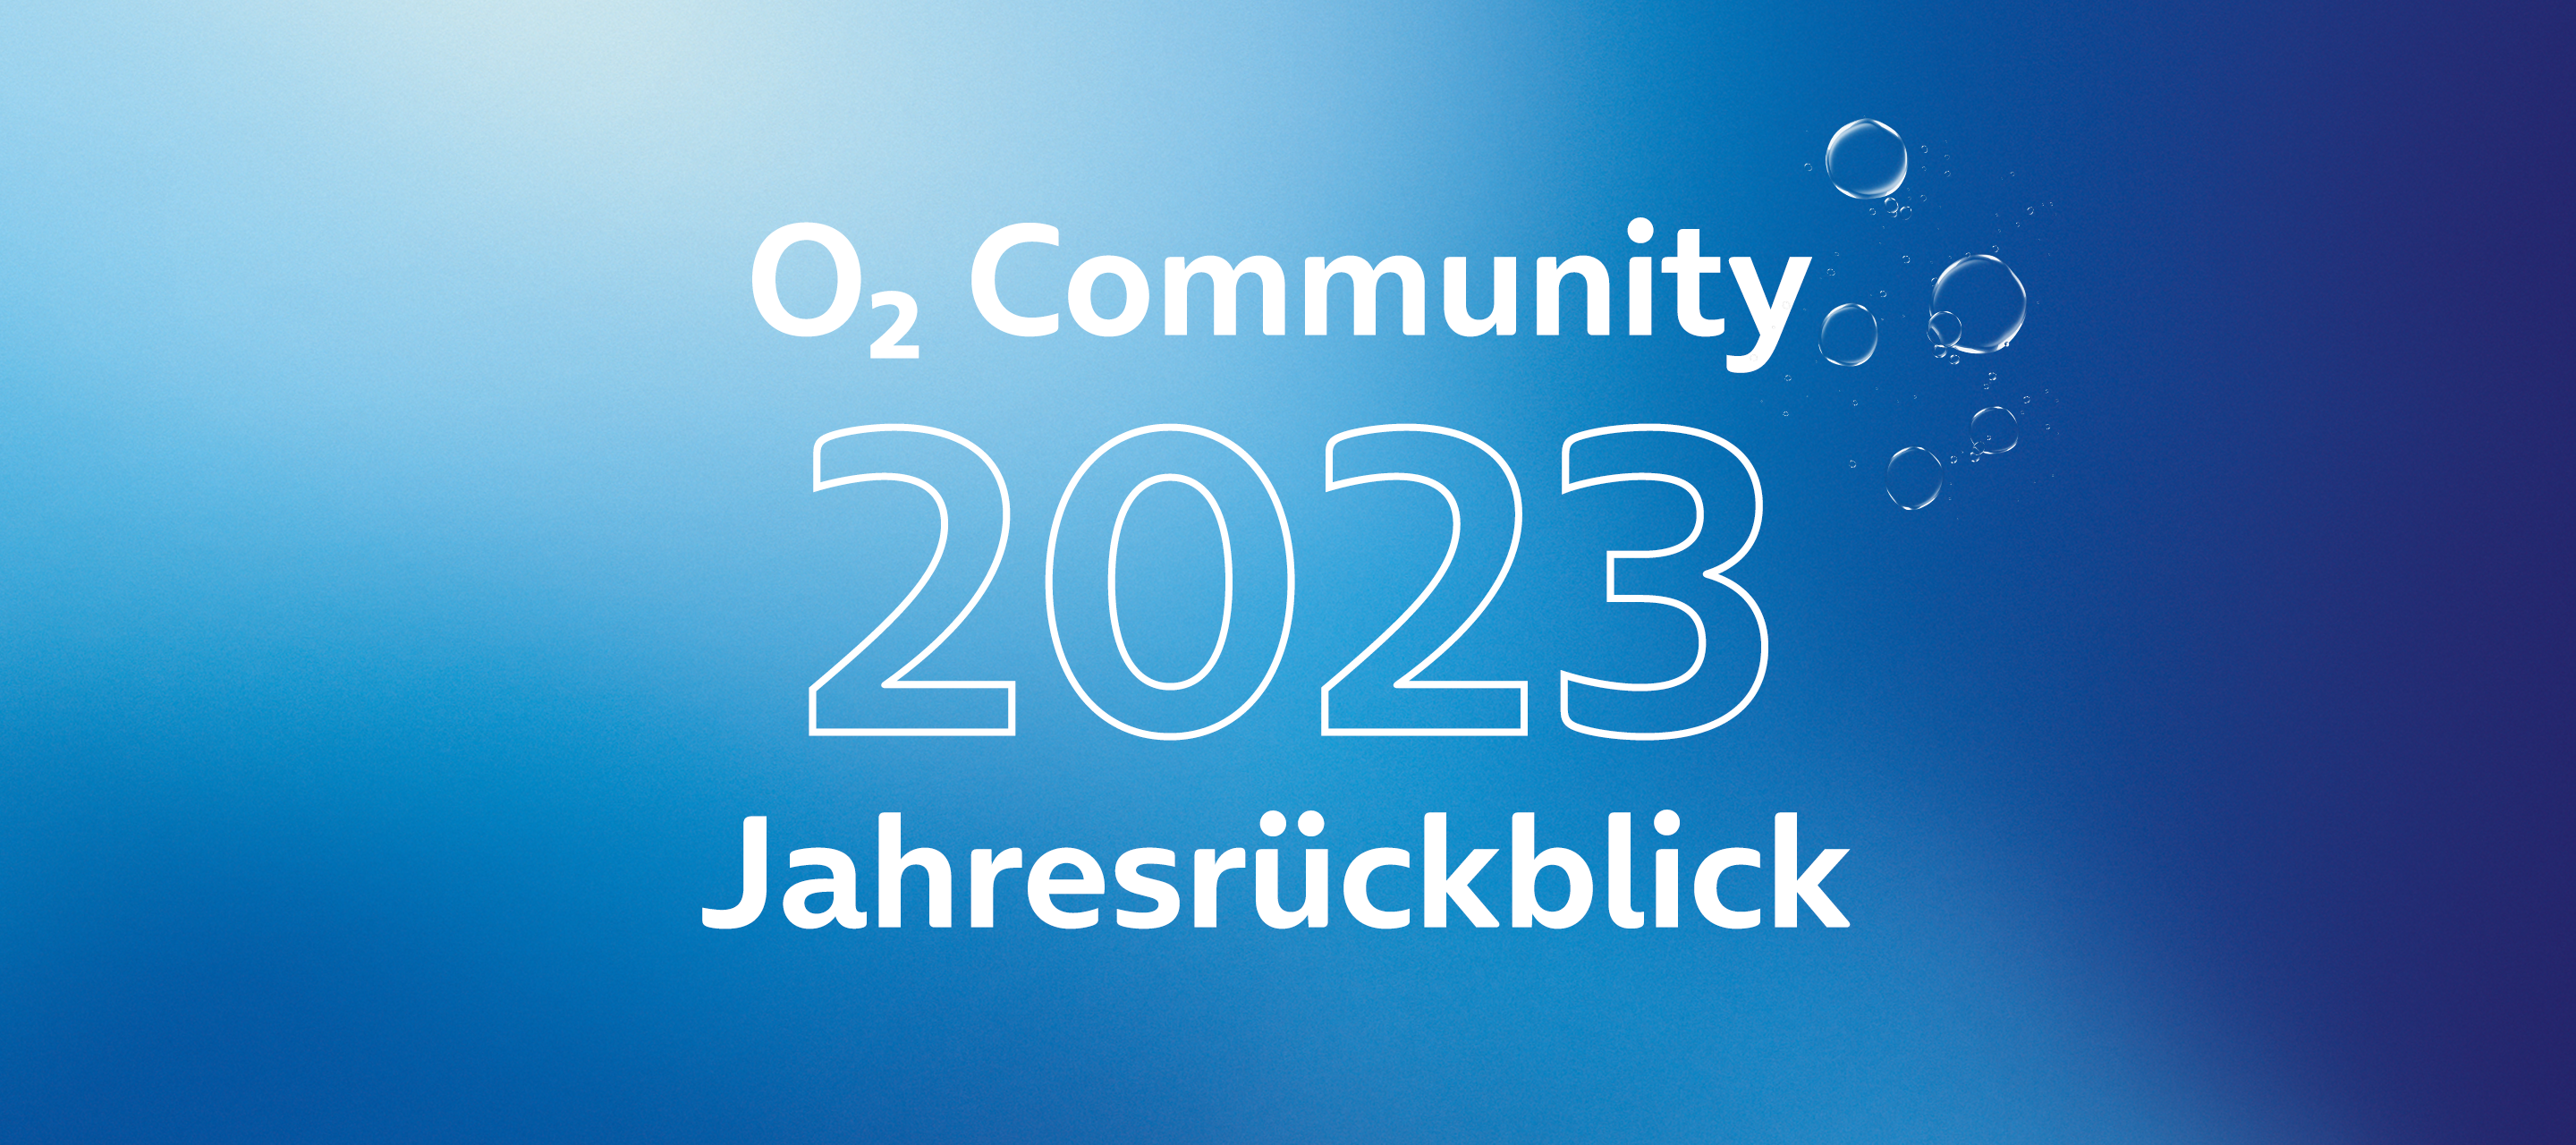 Der O₂ Community Jahresrückblick 2023